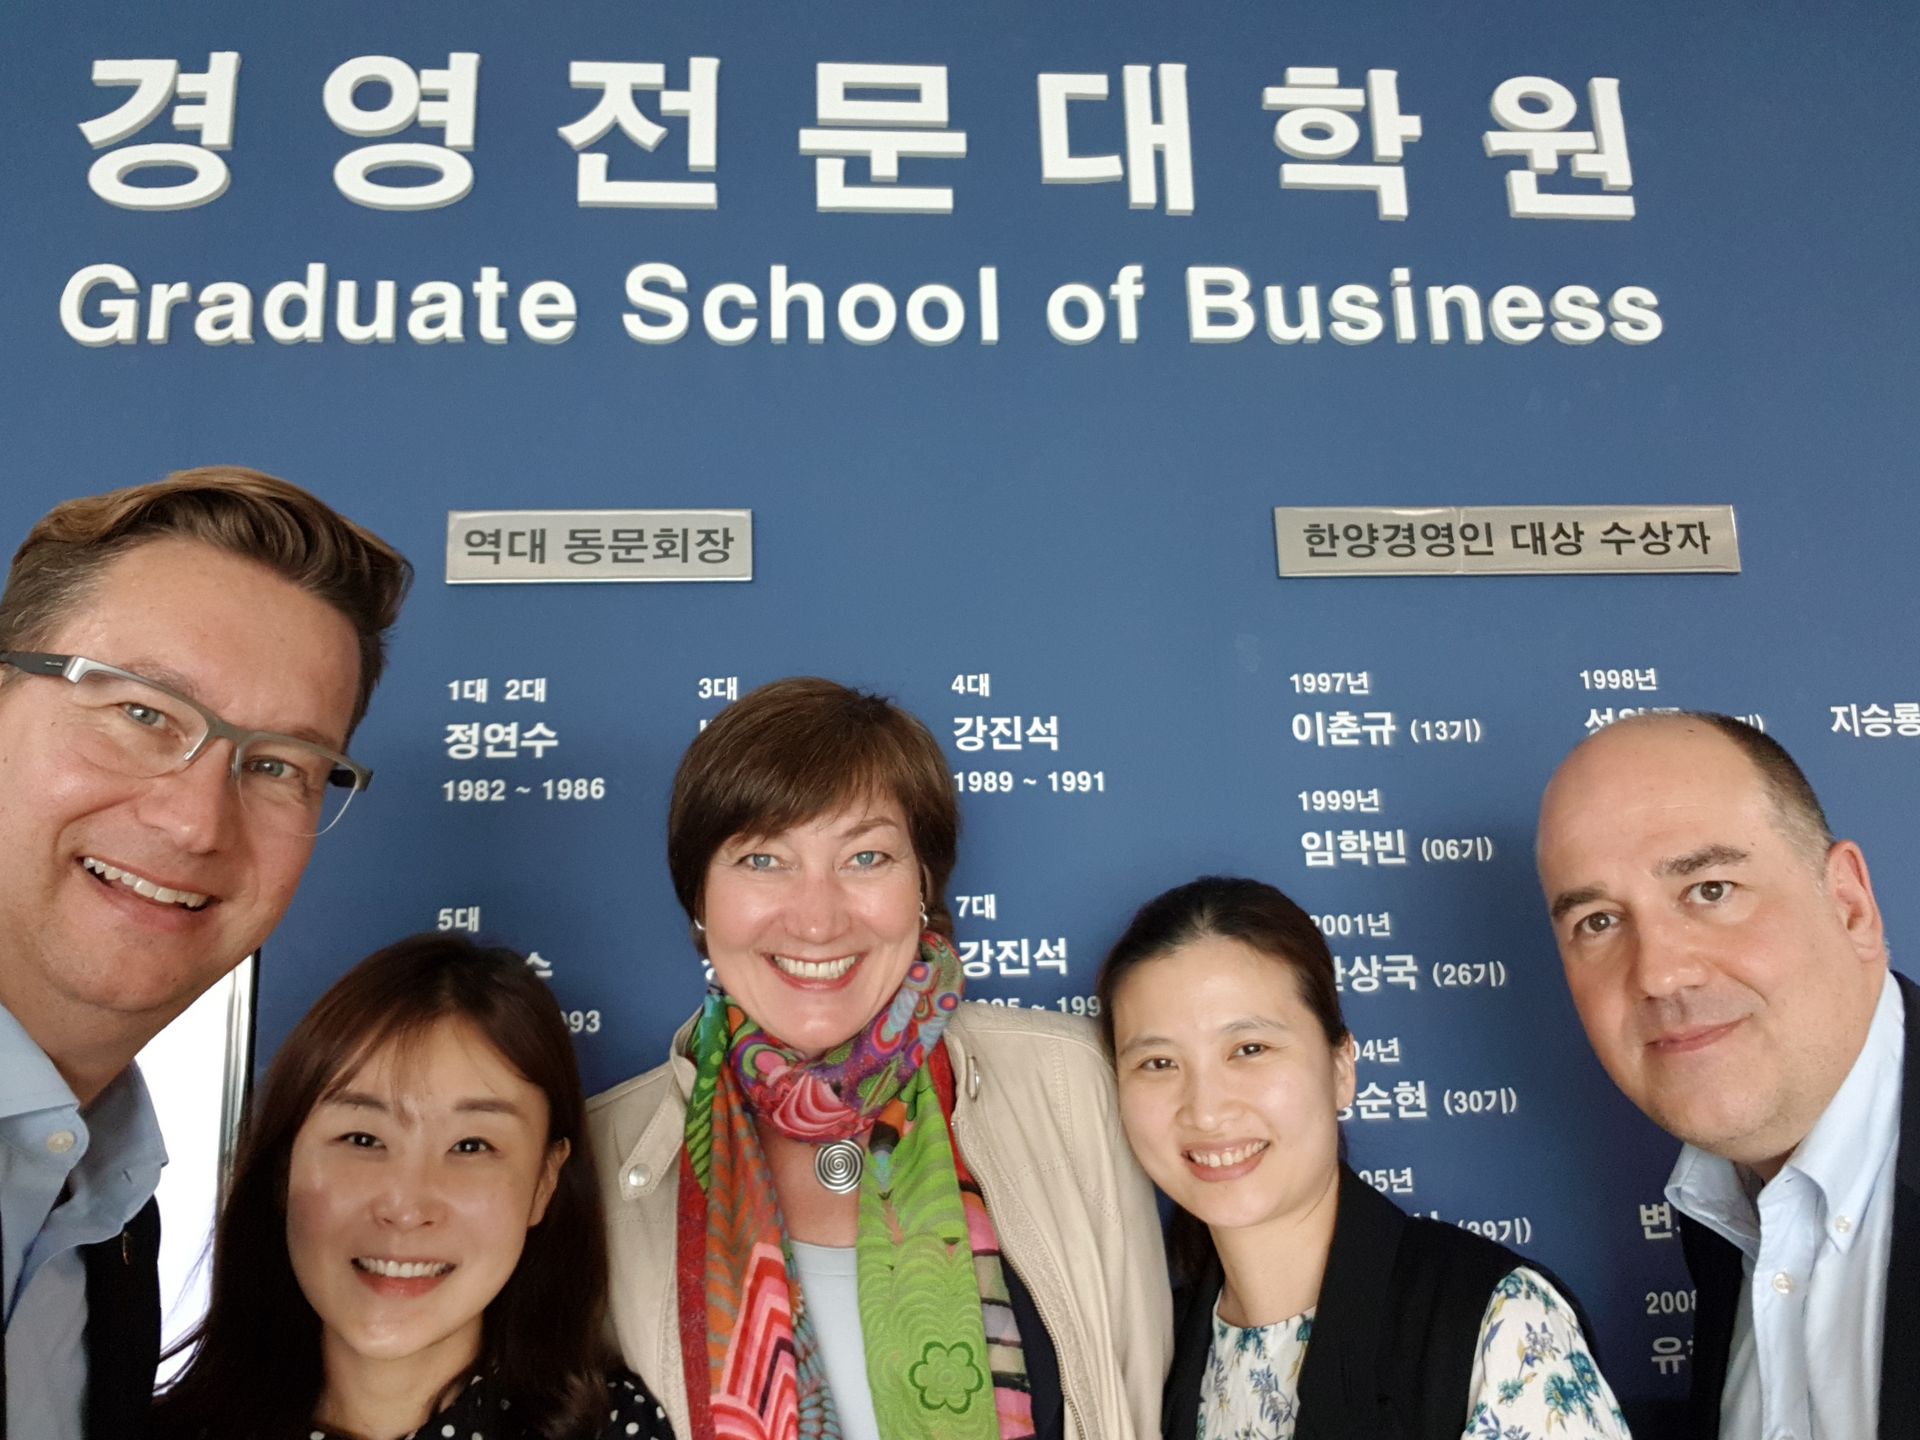 ProfessorInnen vor der Graduate School of Business (Asien)